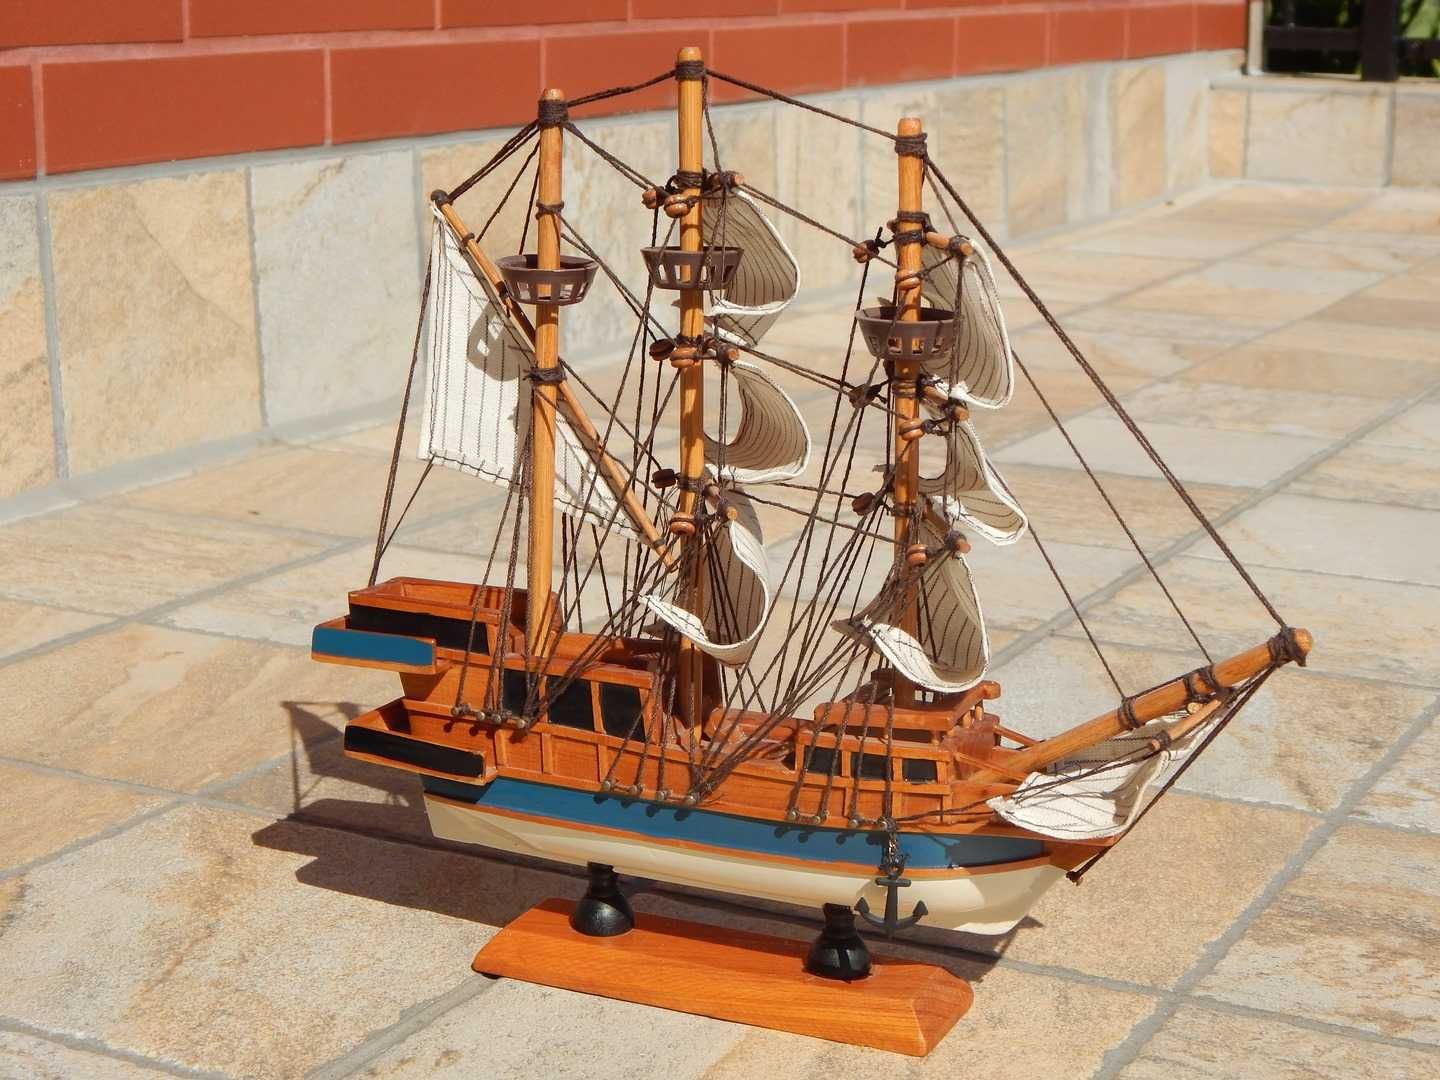 Macheta nava corabie cu panze decorativa din lemn + textil Revenge